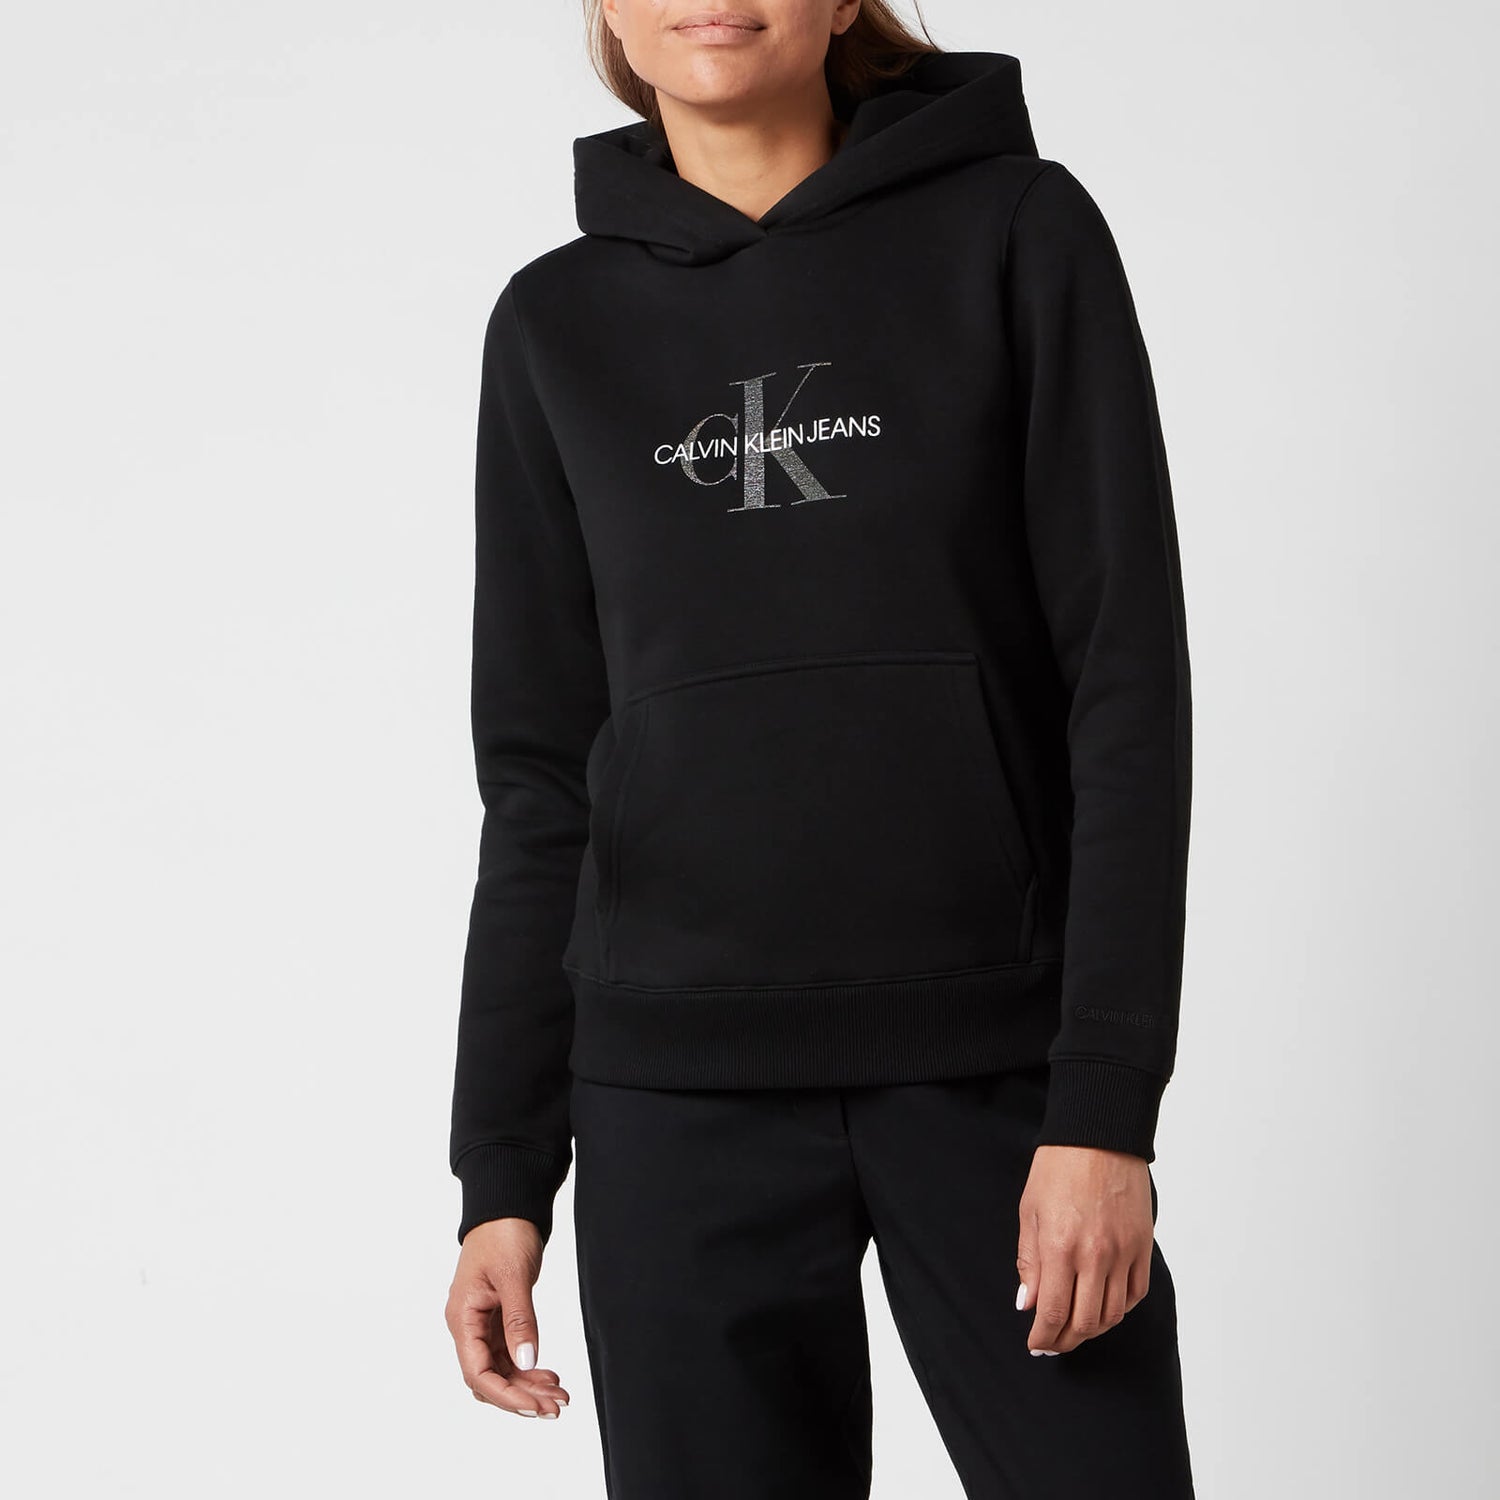 Calvin Klein Jeans Women's Reflective Monogram Hoodie - CK Black